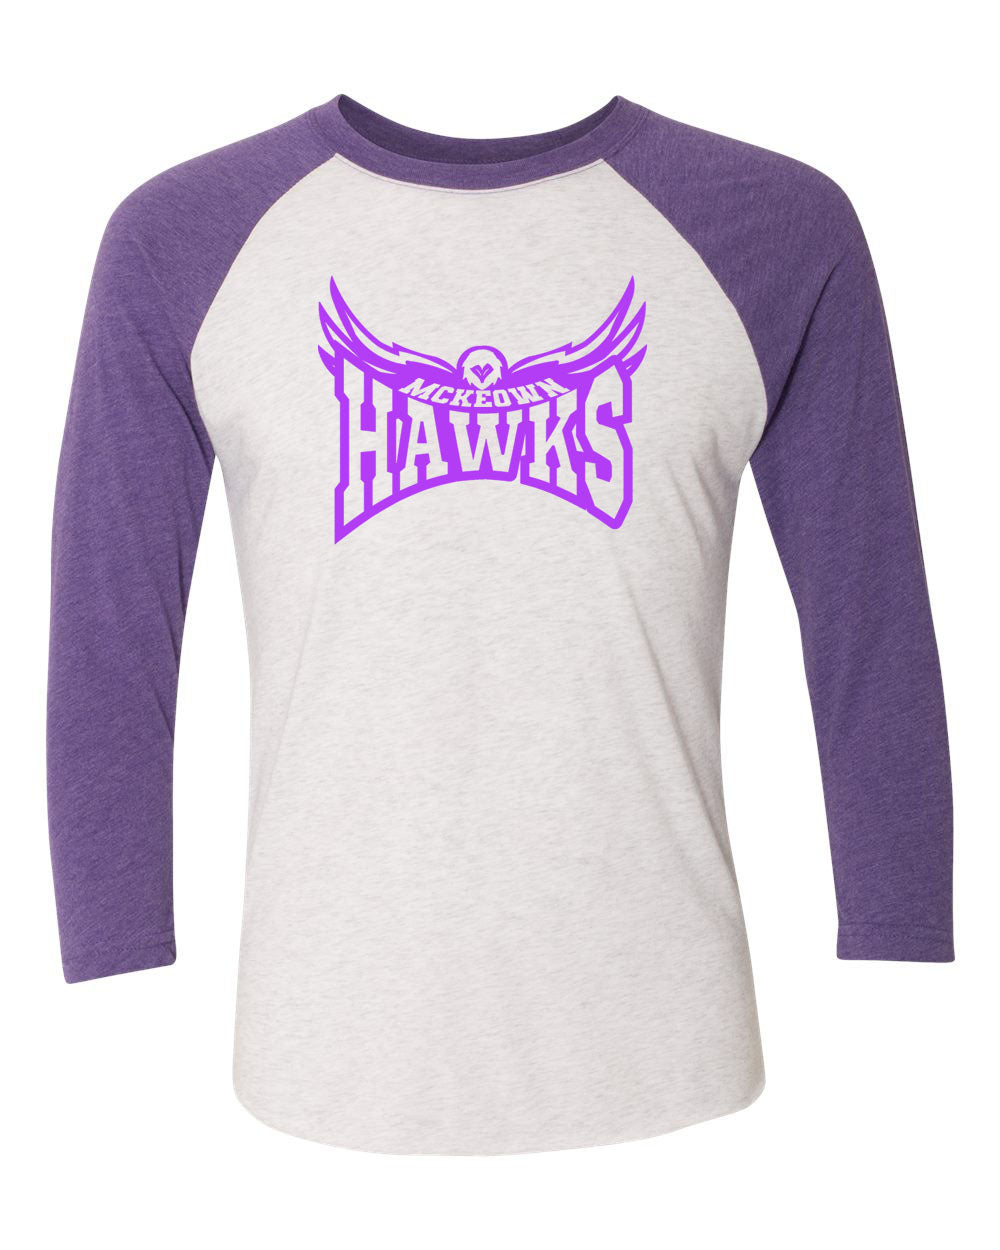 Hampton hawk Raglan shirt